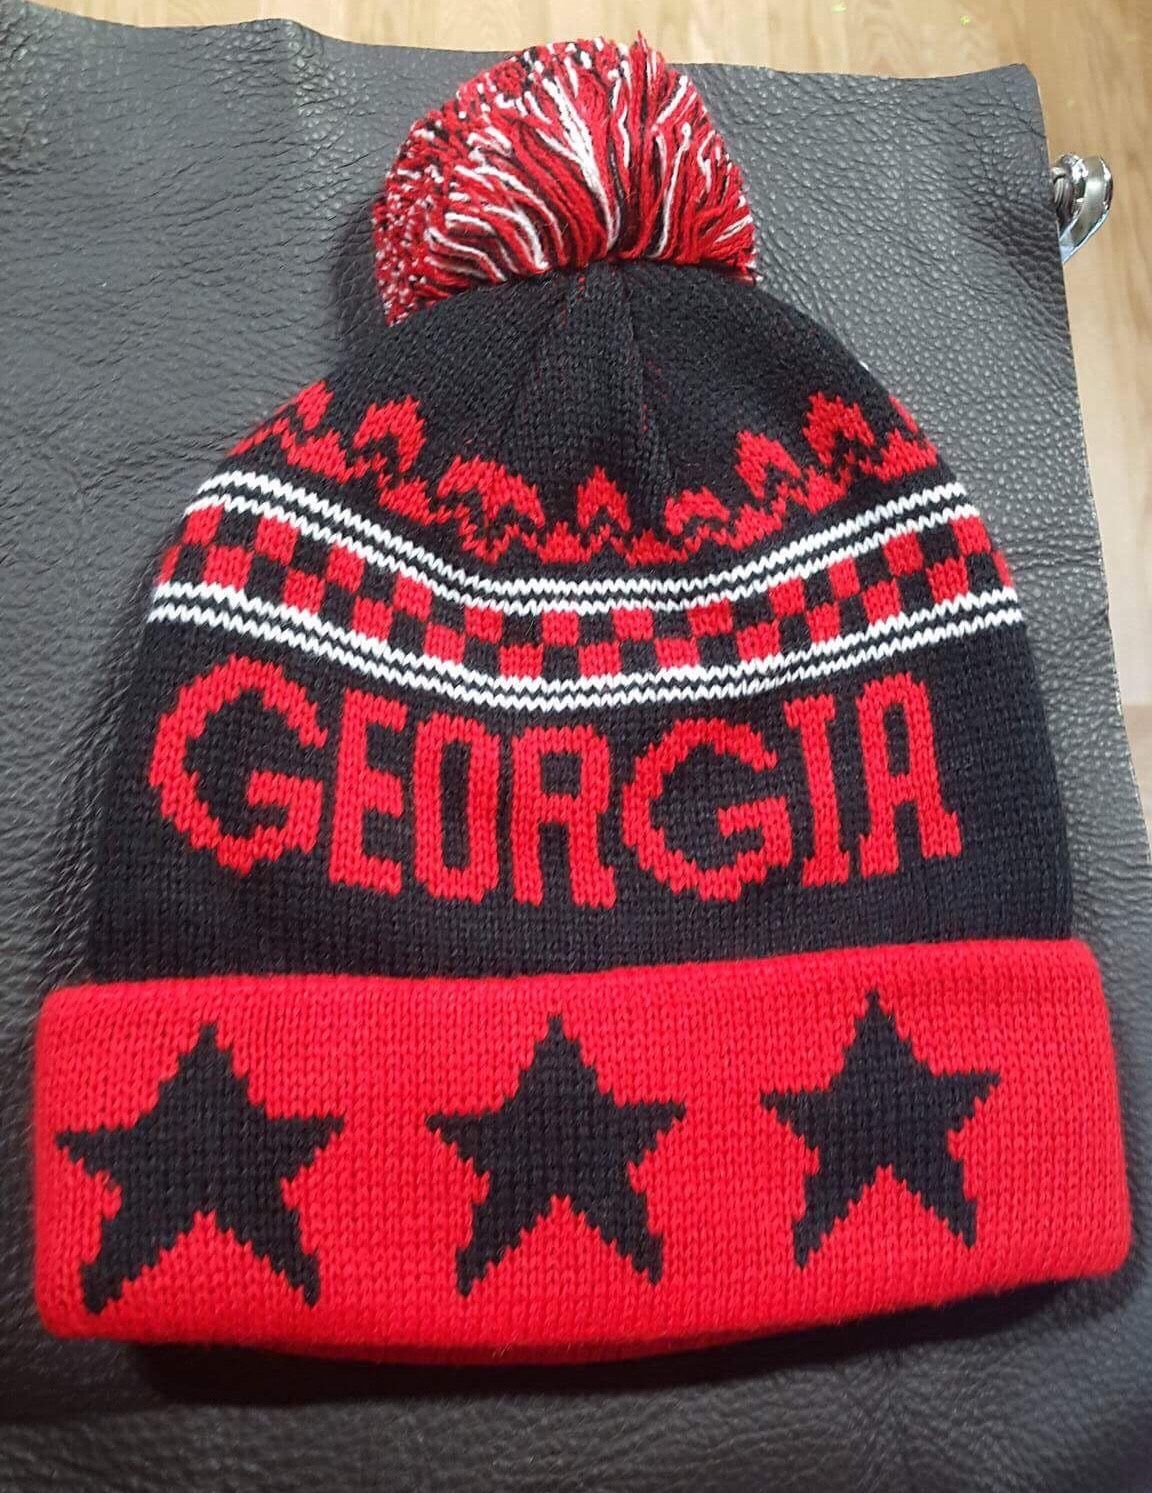 Georgia beanie knitted